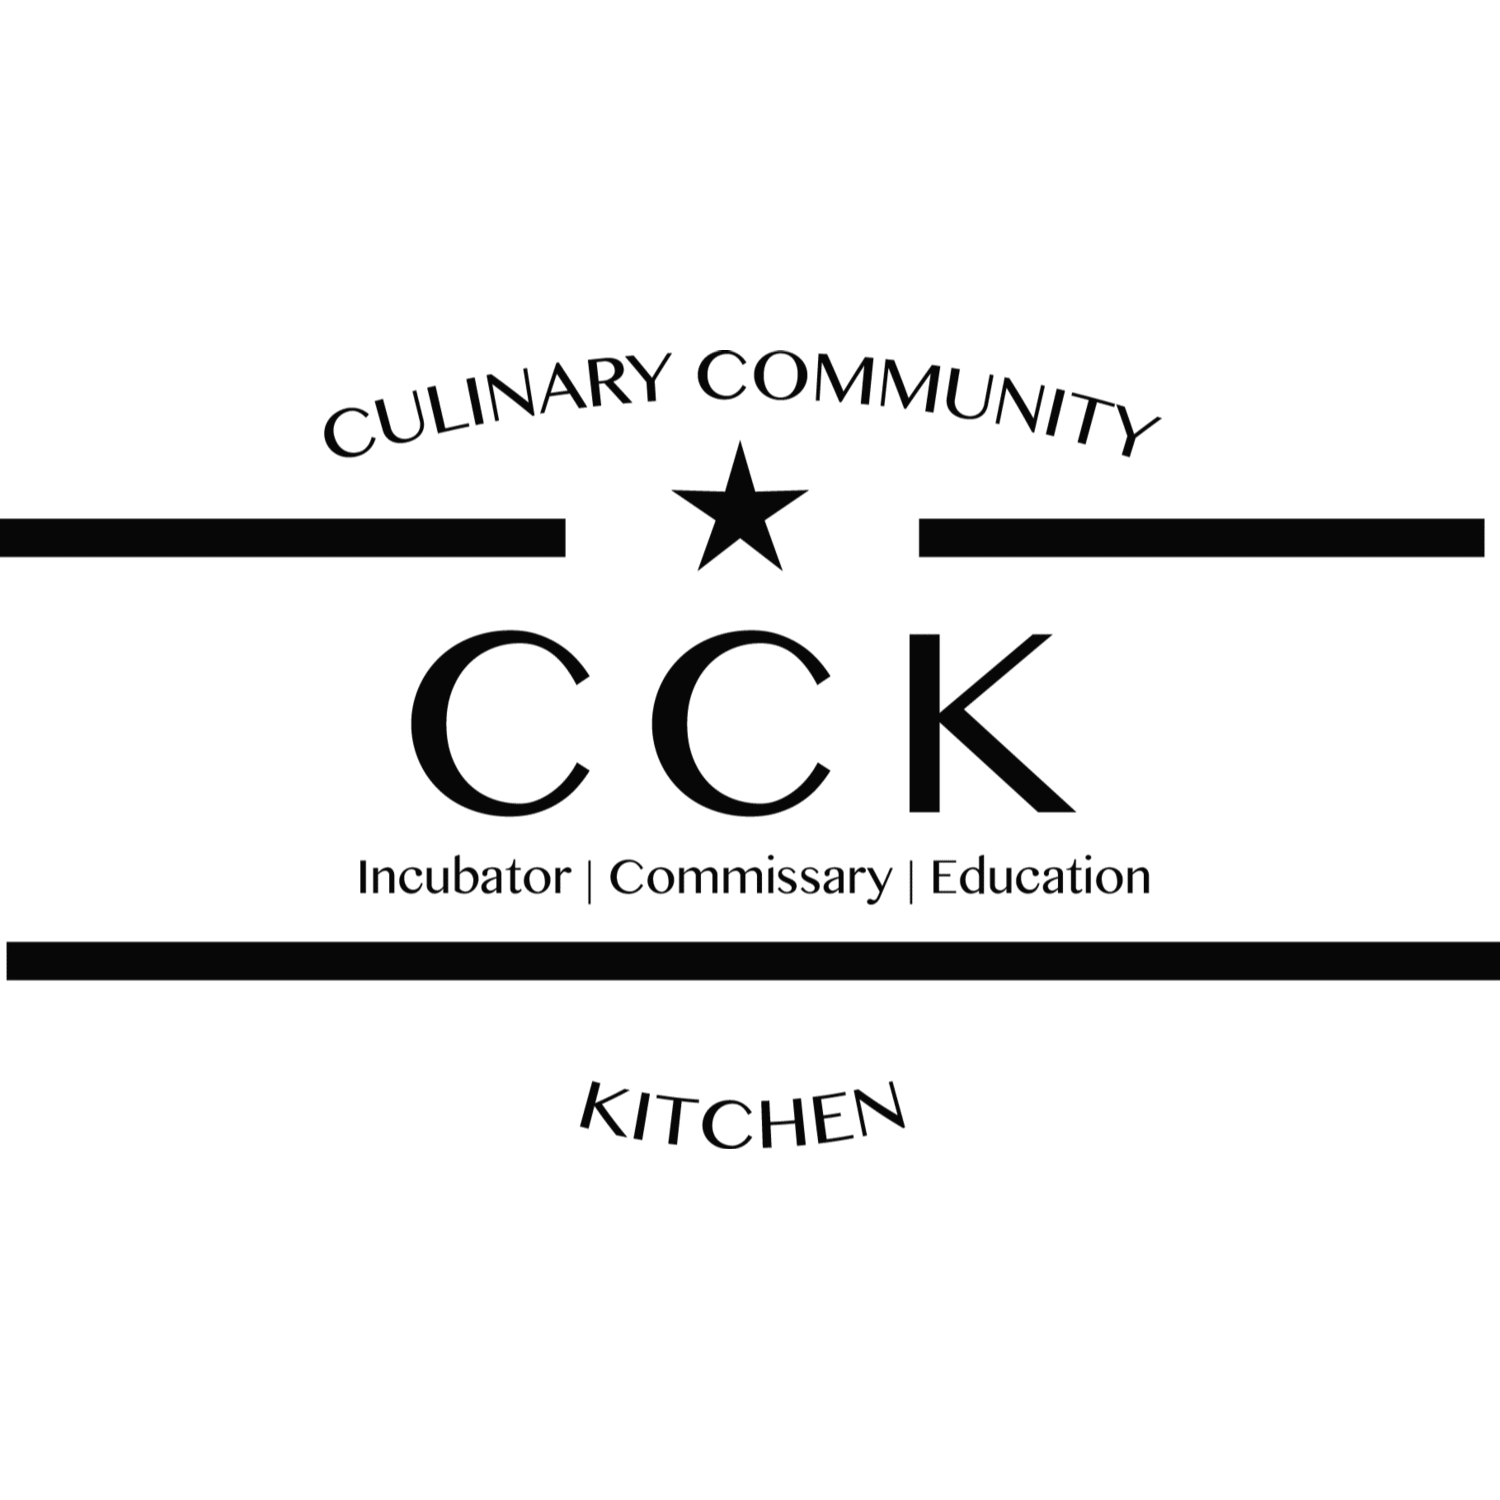 Culinary Community Kitchen - Mesquite, TX 75150 - (972)284-9212 | ShowMeLocal.com